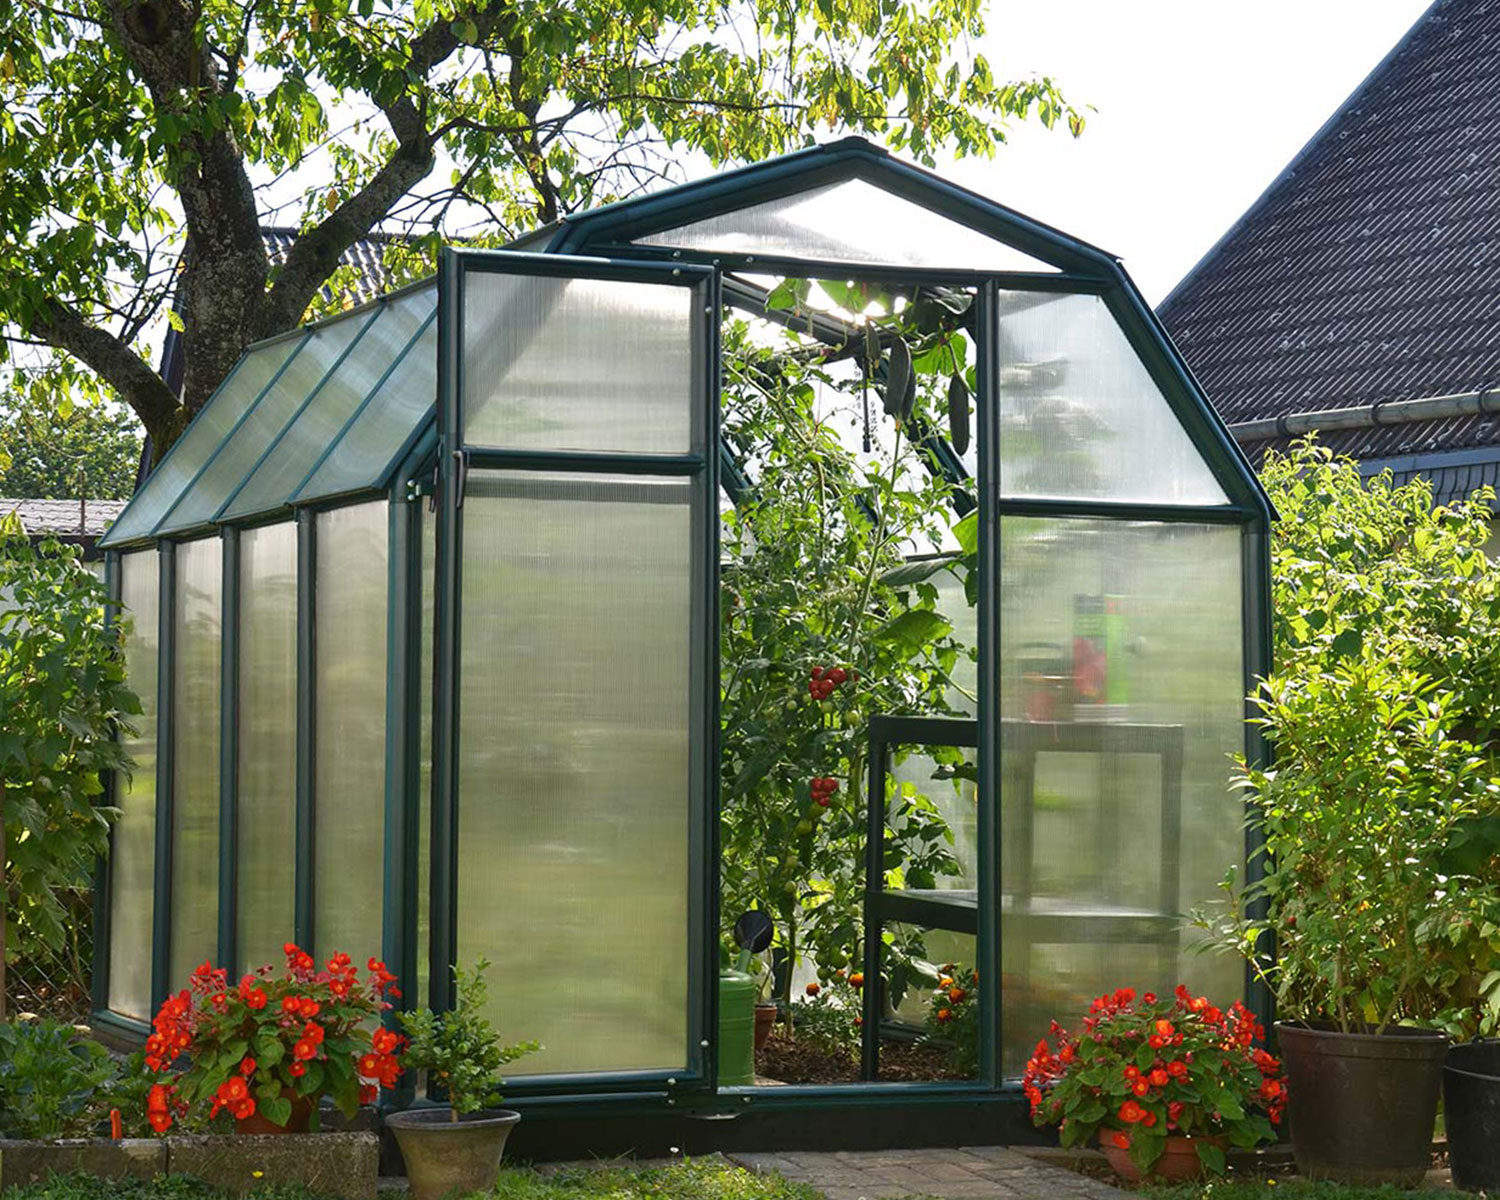 Greenhouse EcoGrow 6' x 8' Kit - Green Structure & Twinwall Glazing